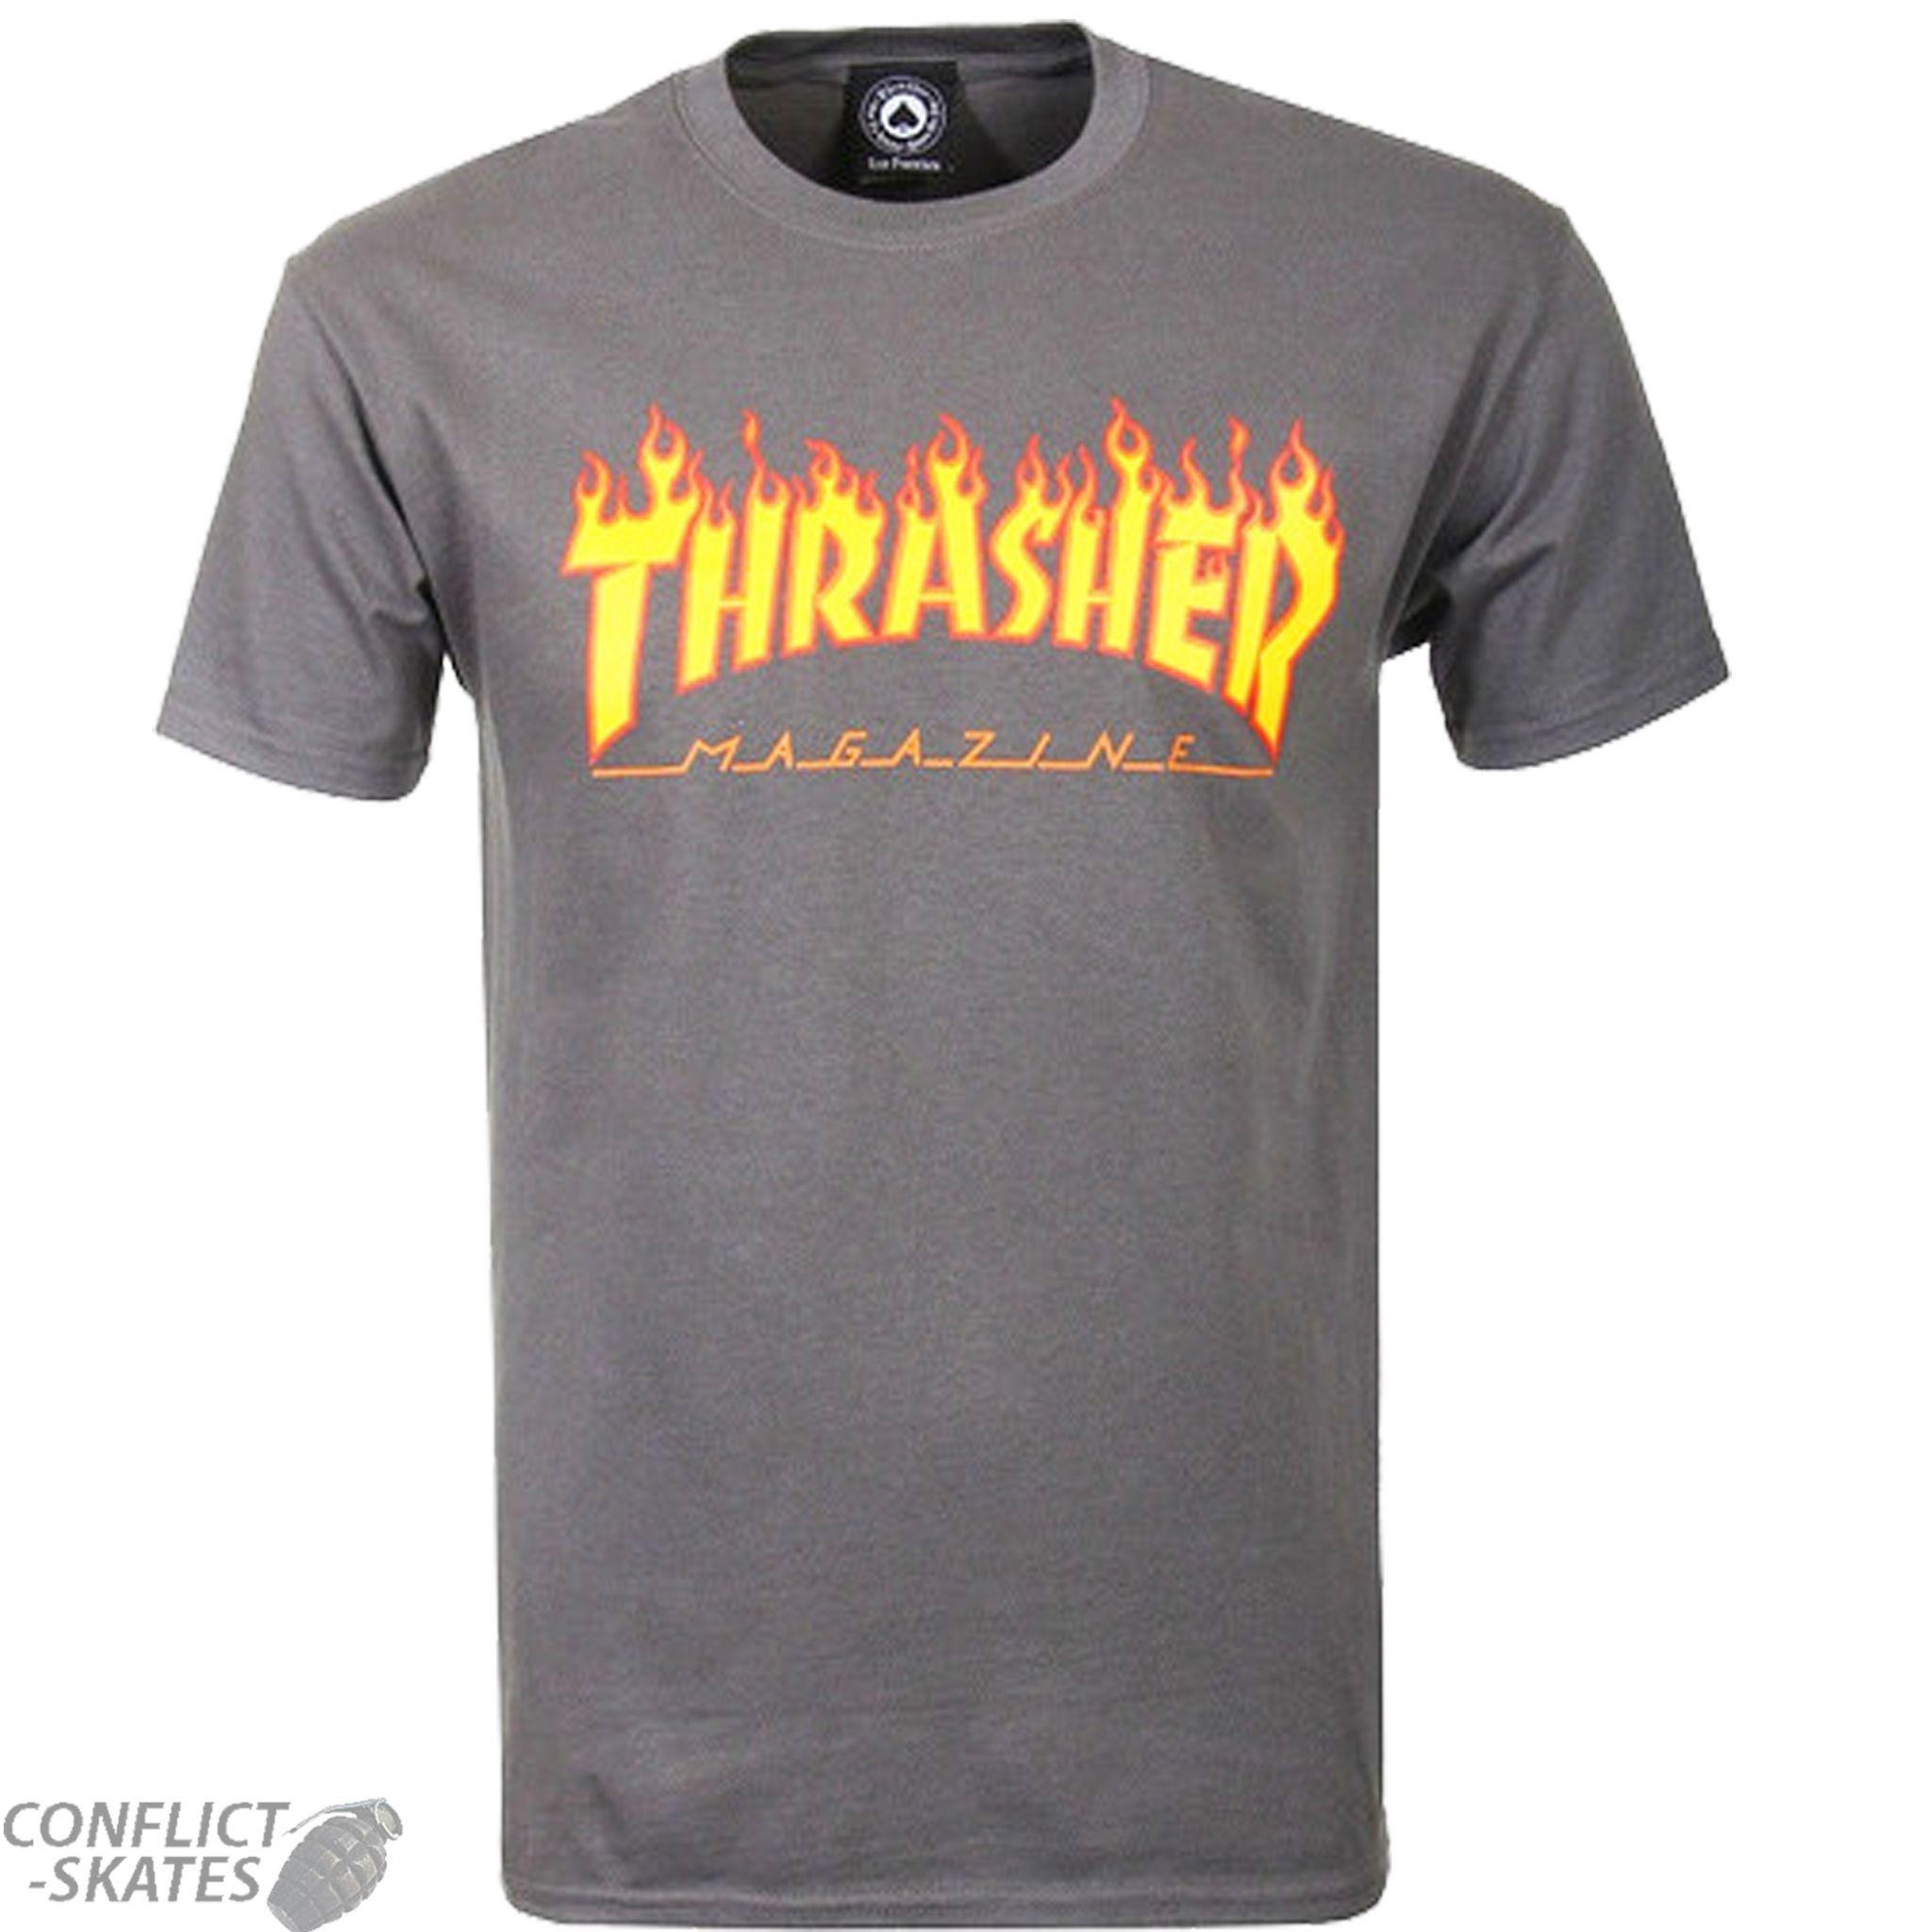 Thrasher Magazine Flames Skateboard Logo - THRASHER MAGAZINE Flame Logo Skateboard T-Shirt Charcoal Grey S M L ...